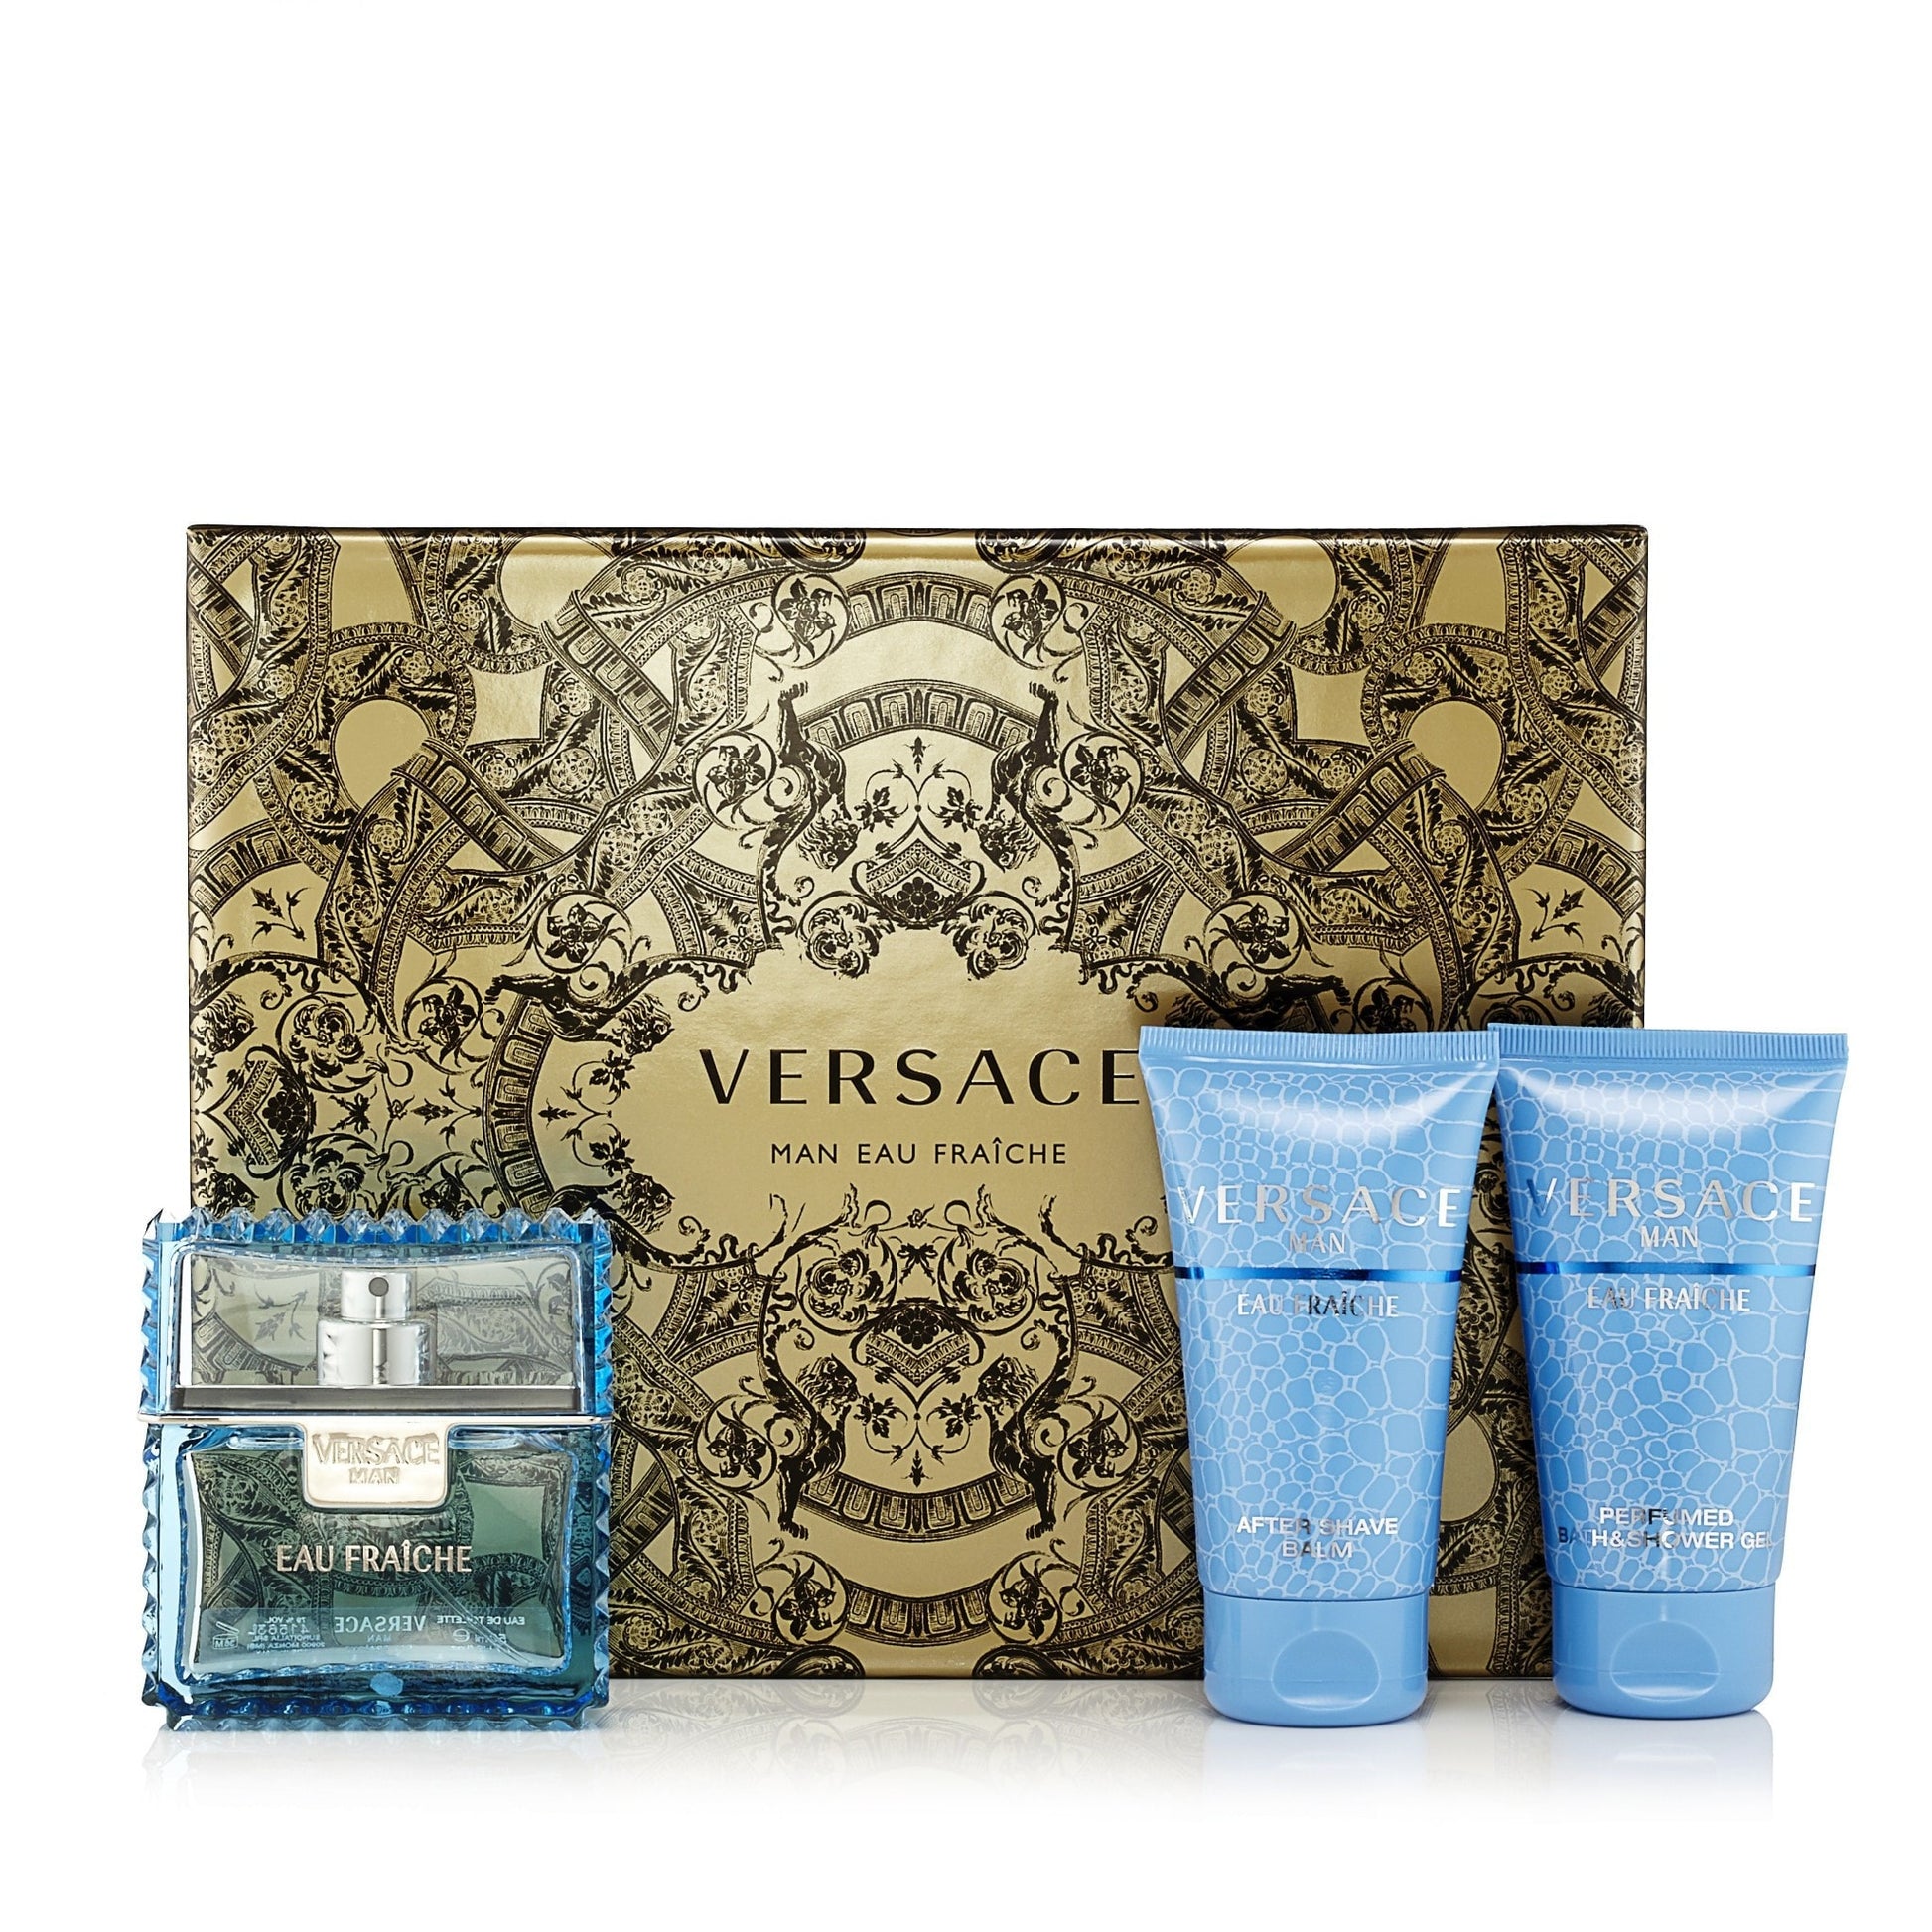 Man Eau Fraiche Gift Set for Men by Versace 1.7 oz. Click to open in modal